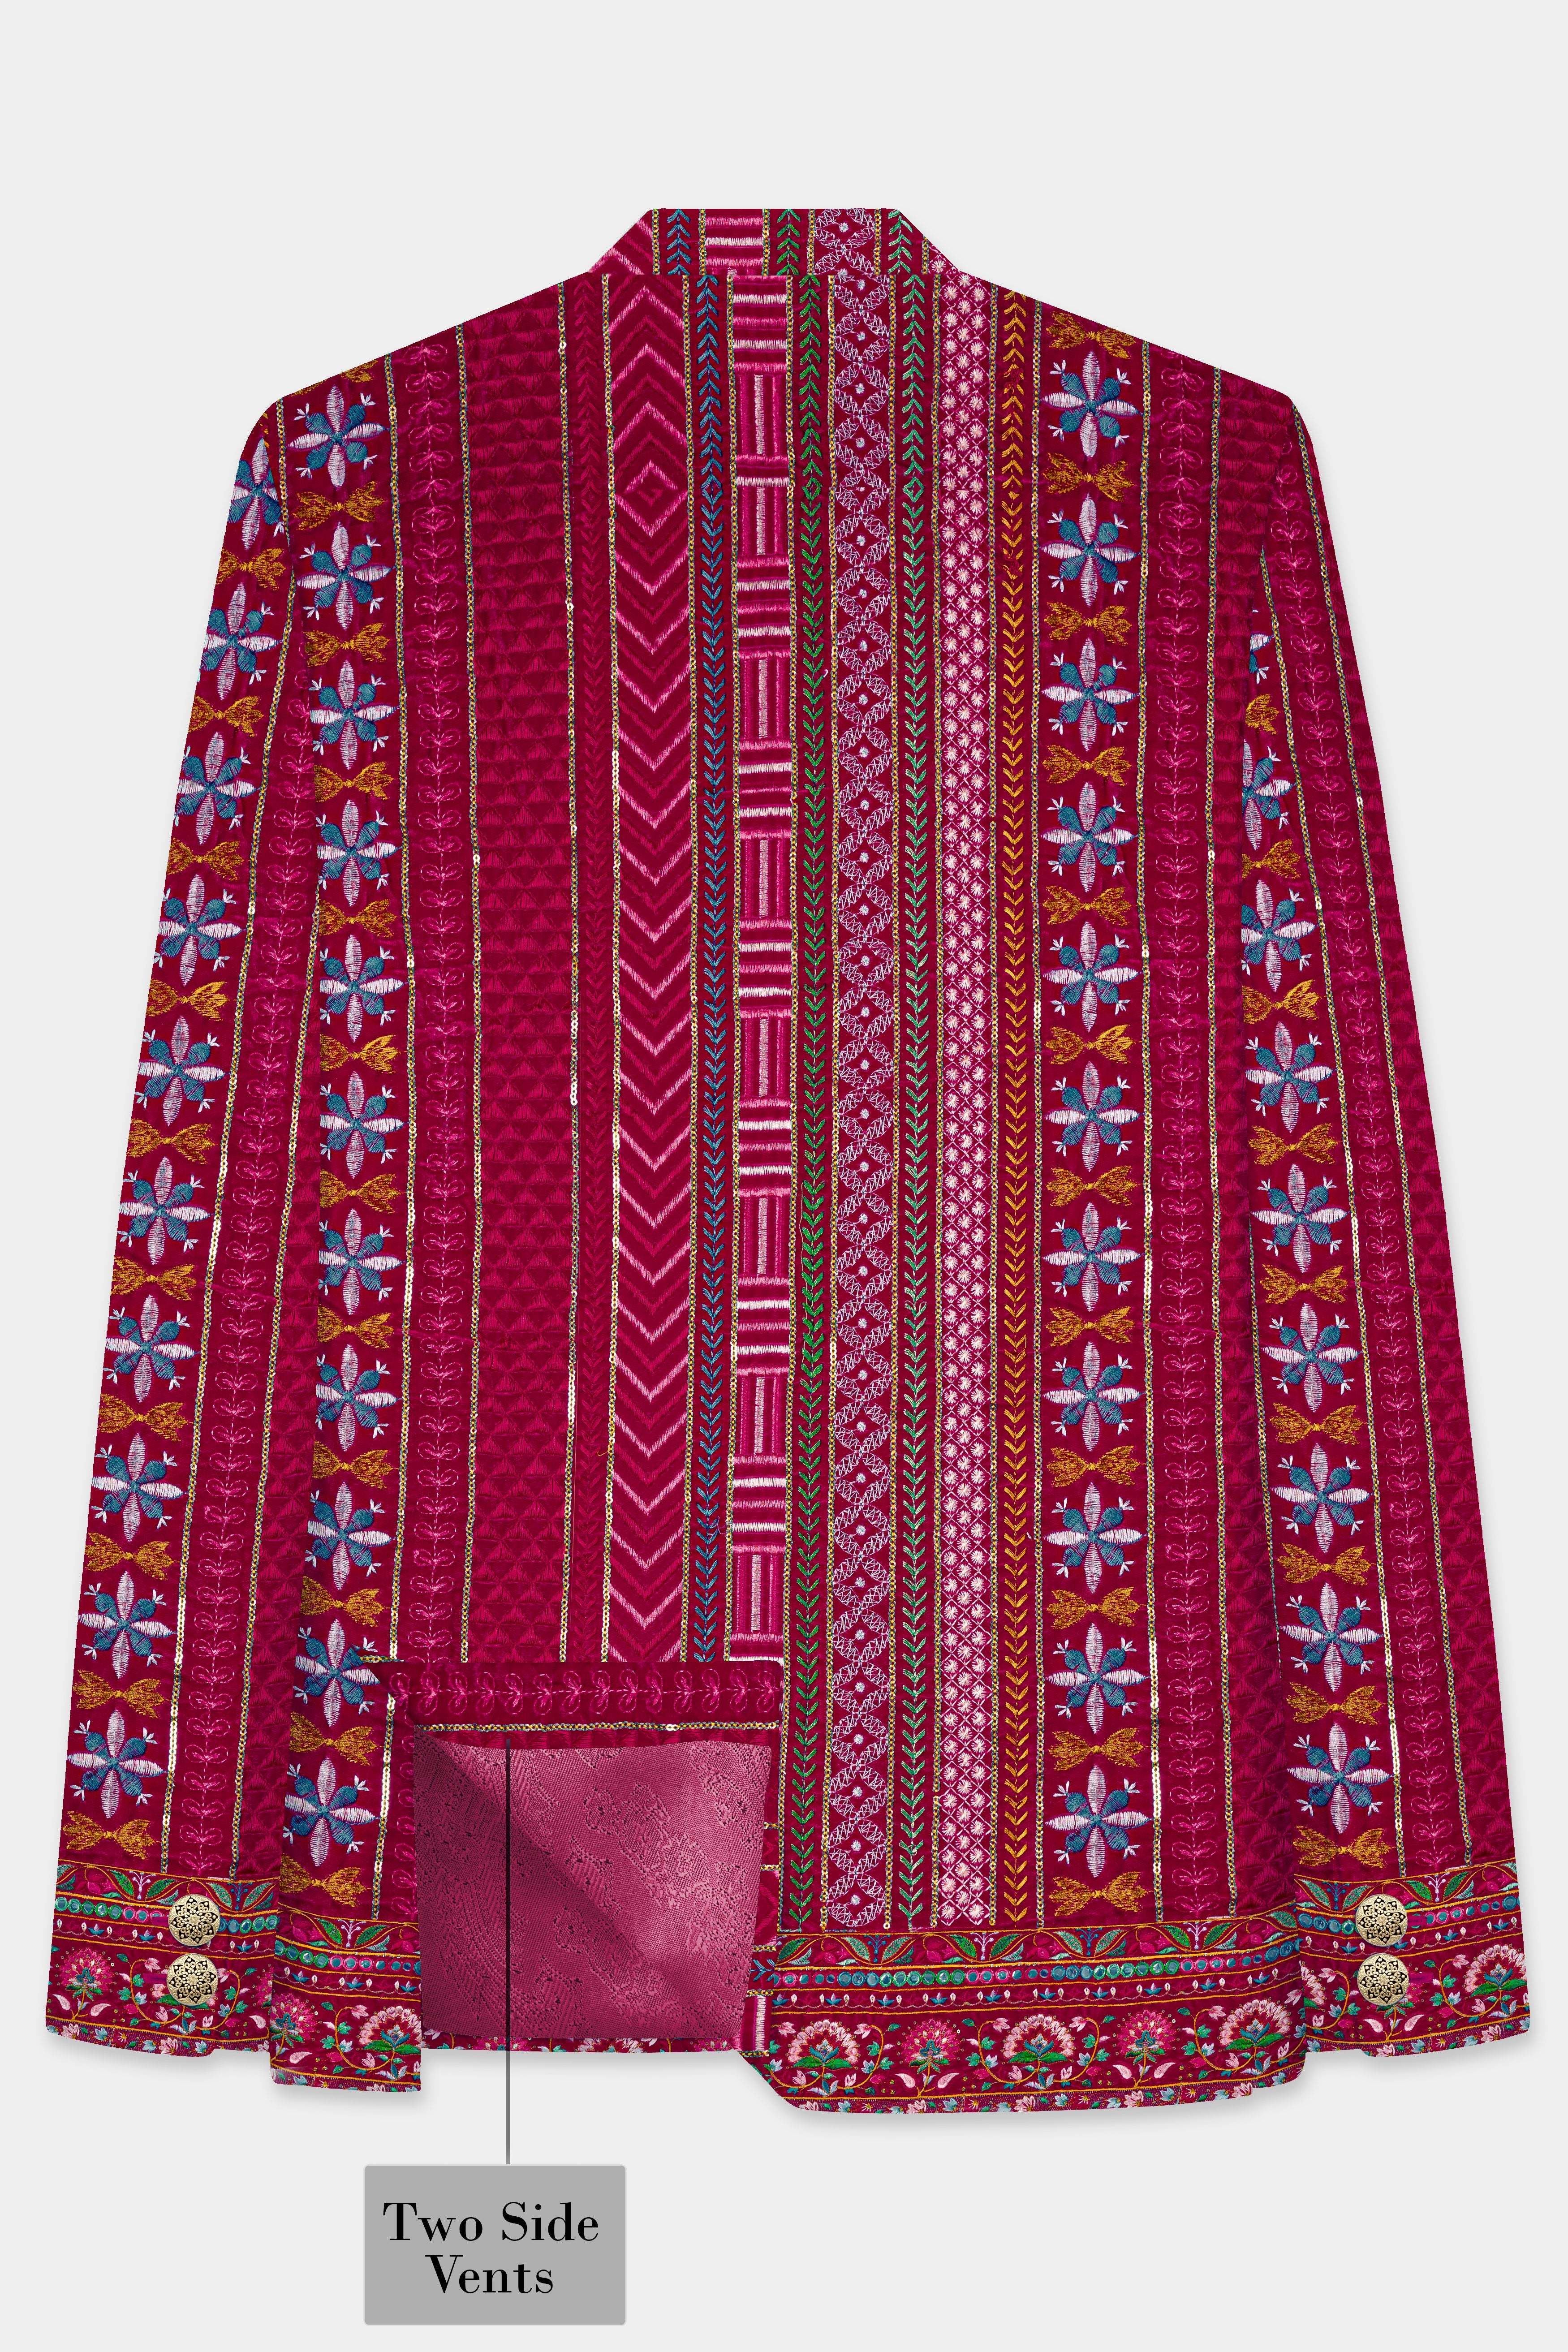 Merlot Pink sequin and Multicolor thread Embroidered Velvet Bandhgala Jodhpuri